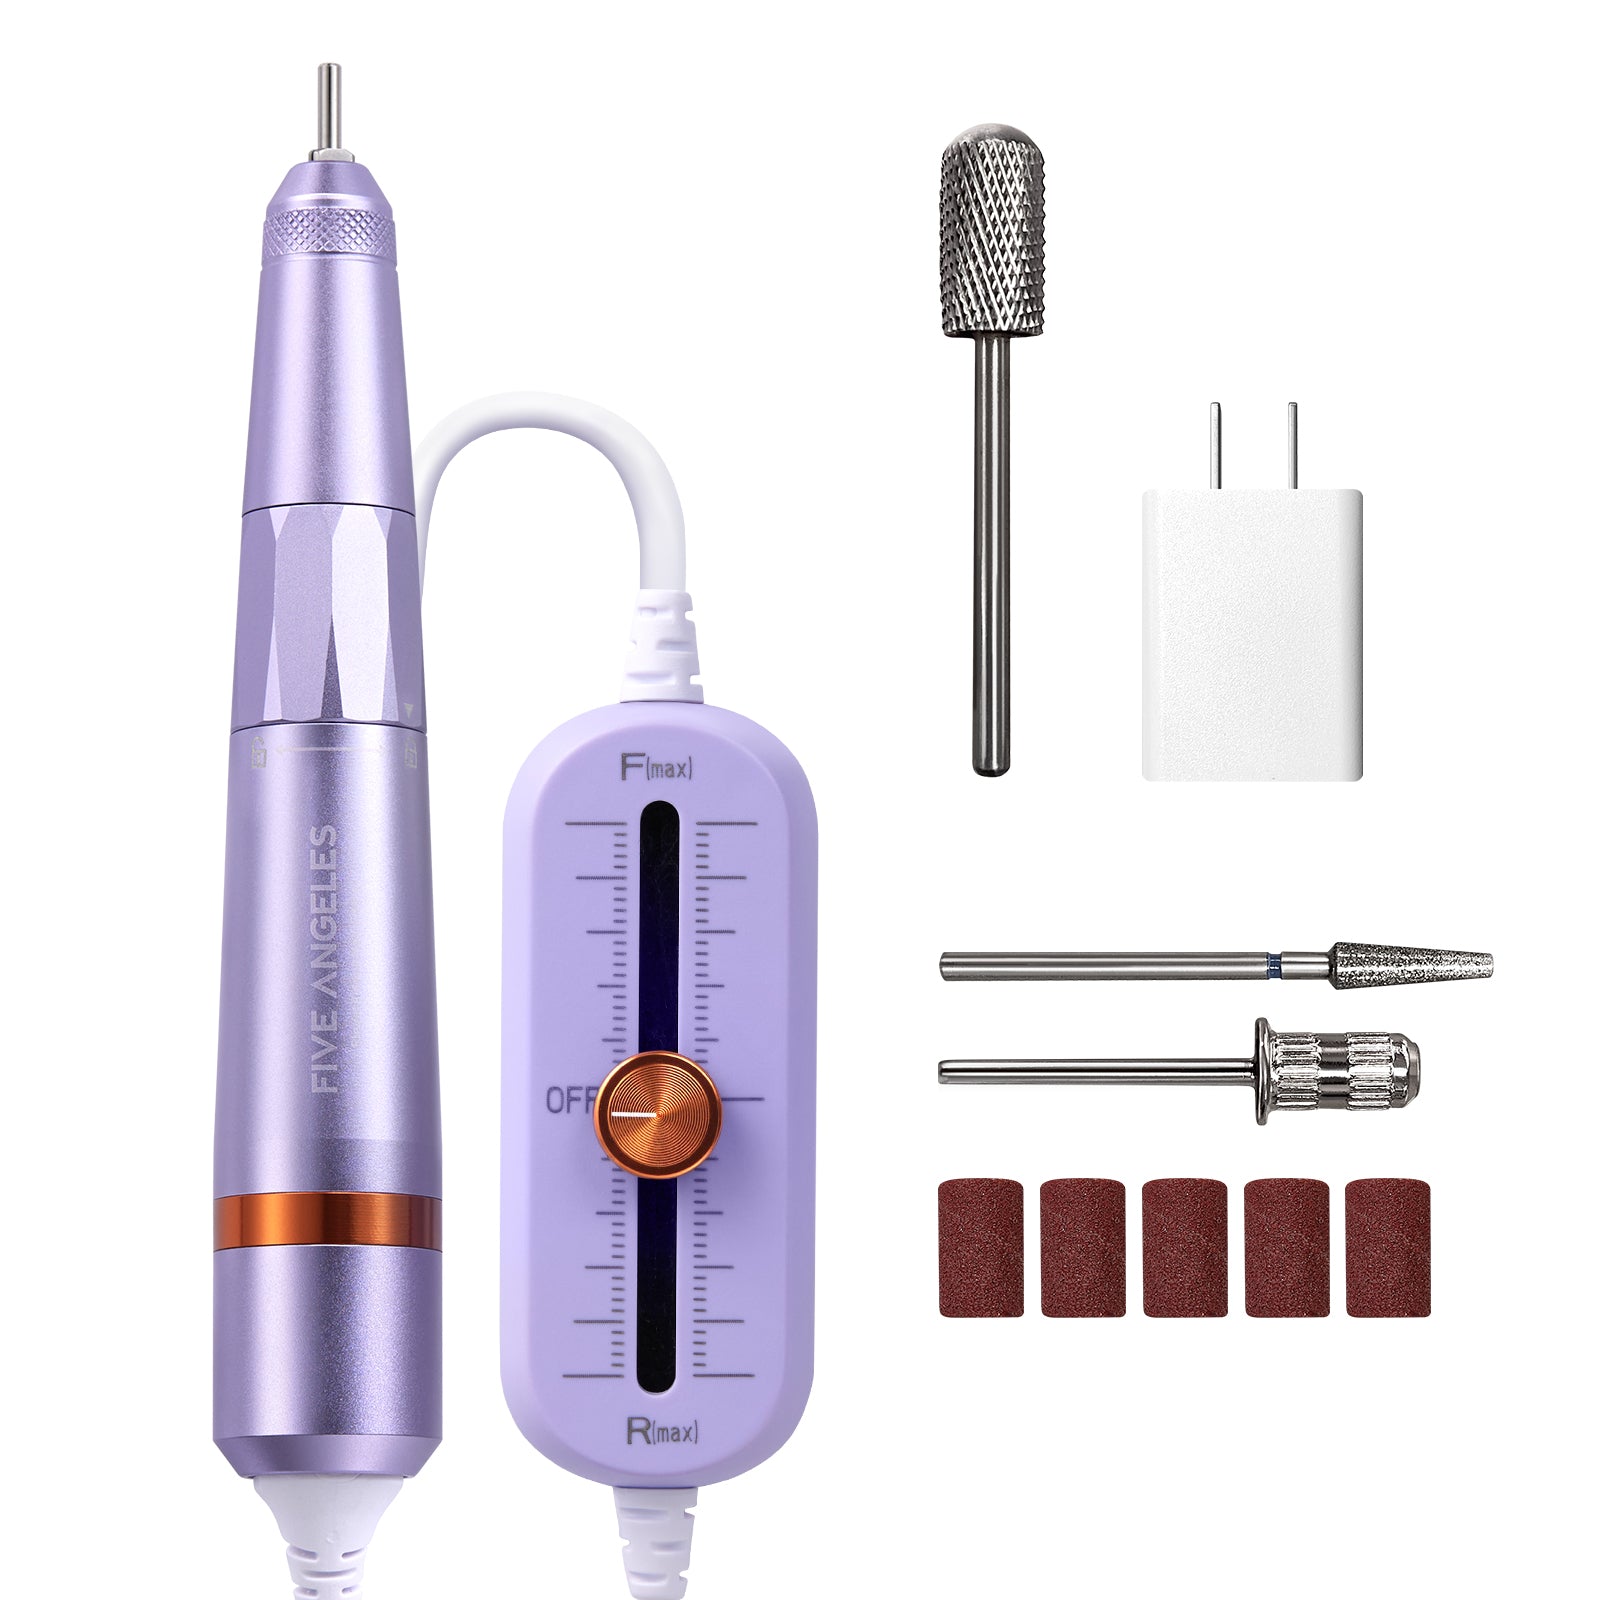 Shop Electric Nail Drill Set Sale online | Lazada.com.ph